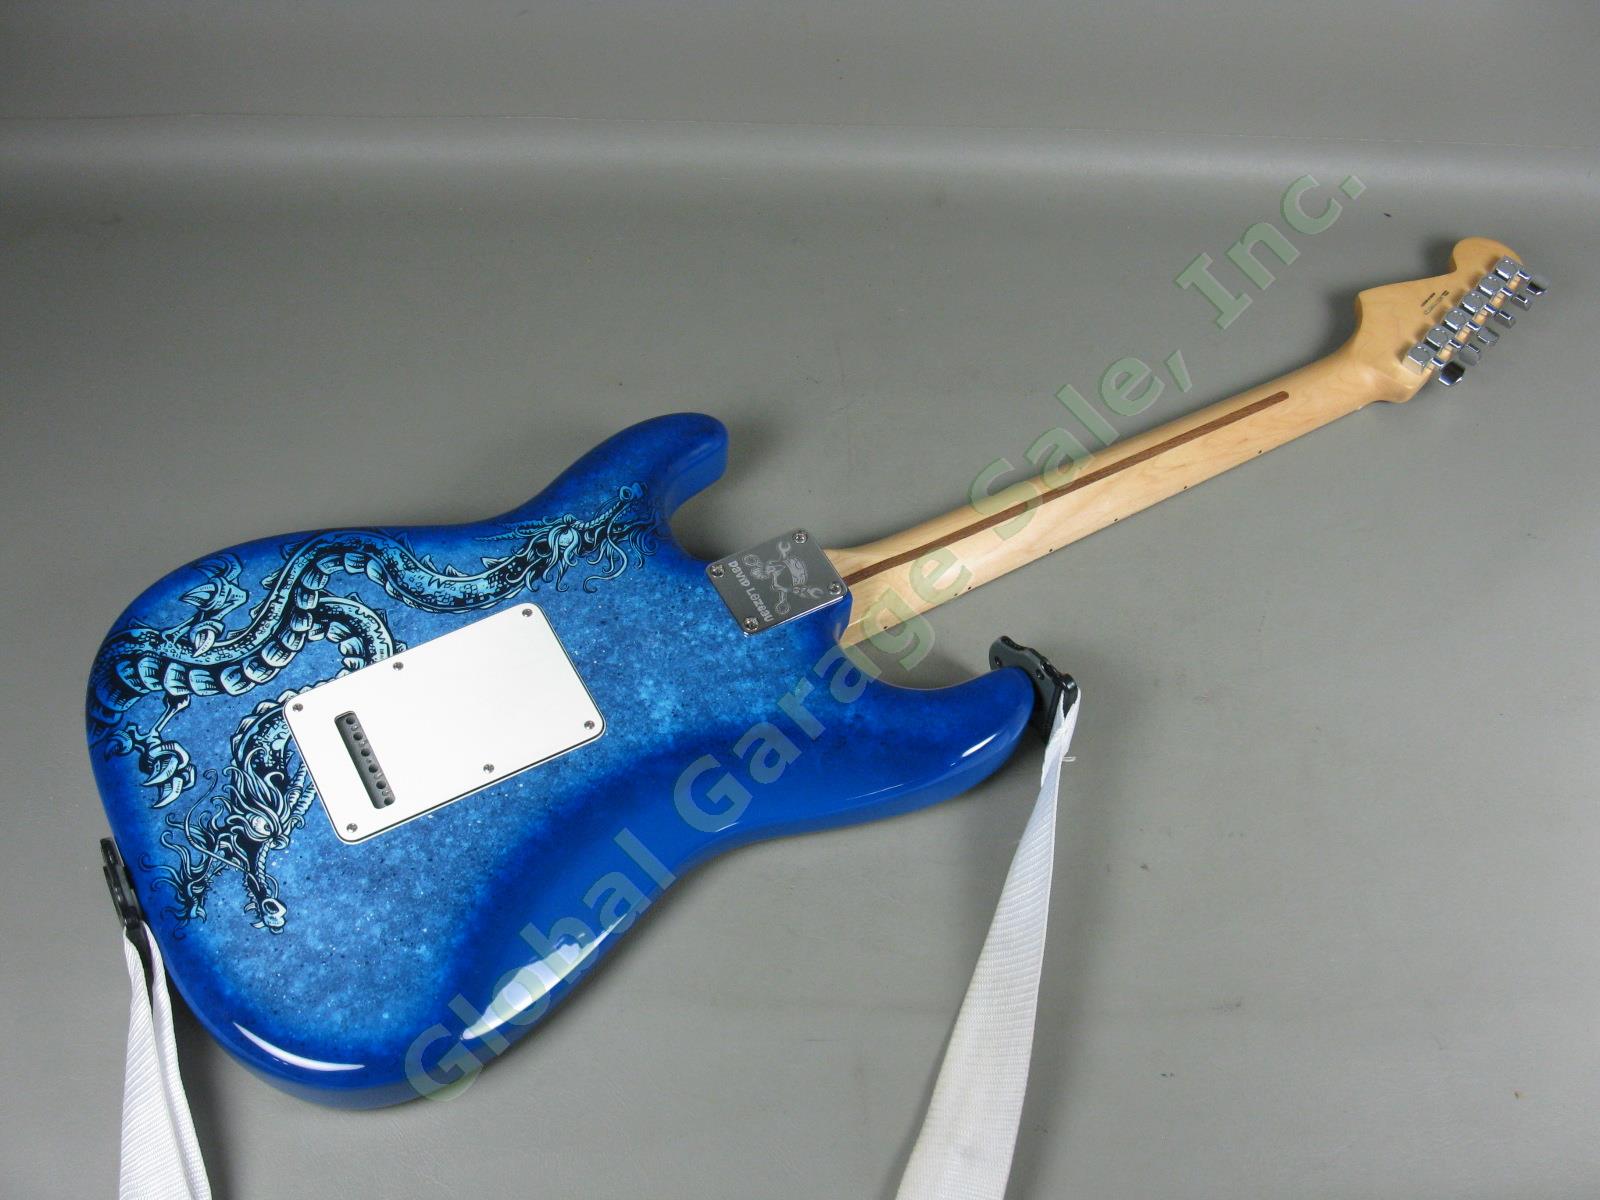 MINT! 2015 Fender David Lozeau Blue Dragon Stratocaster Electric Guitar w/Case 13